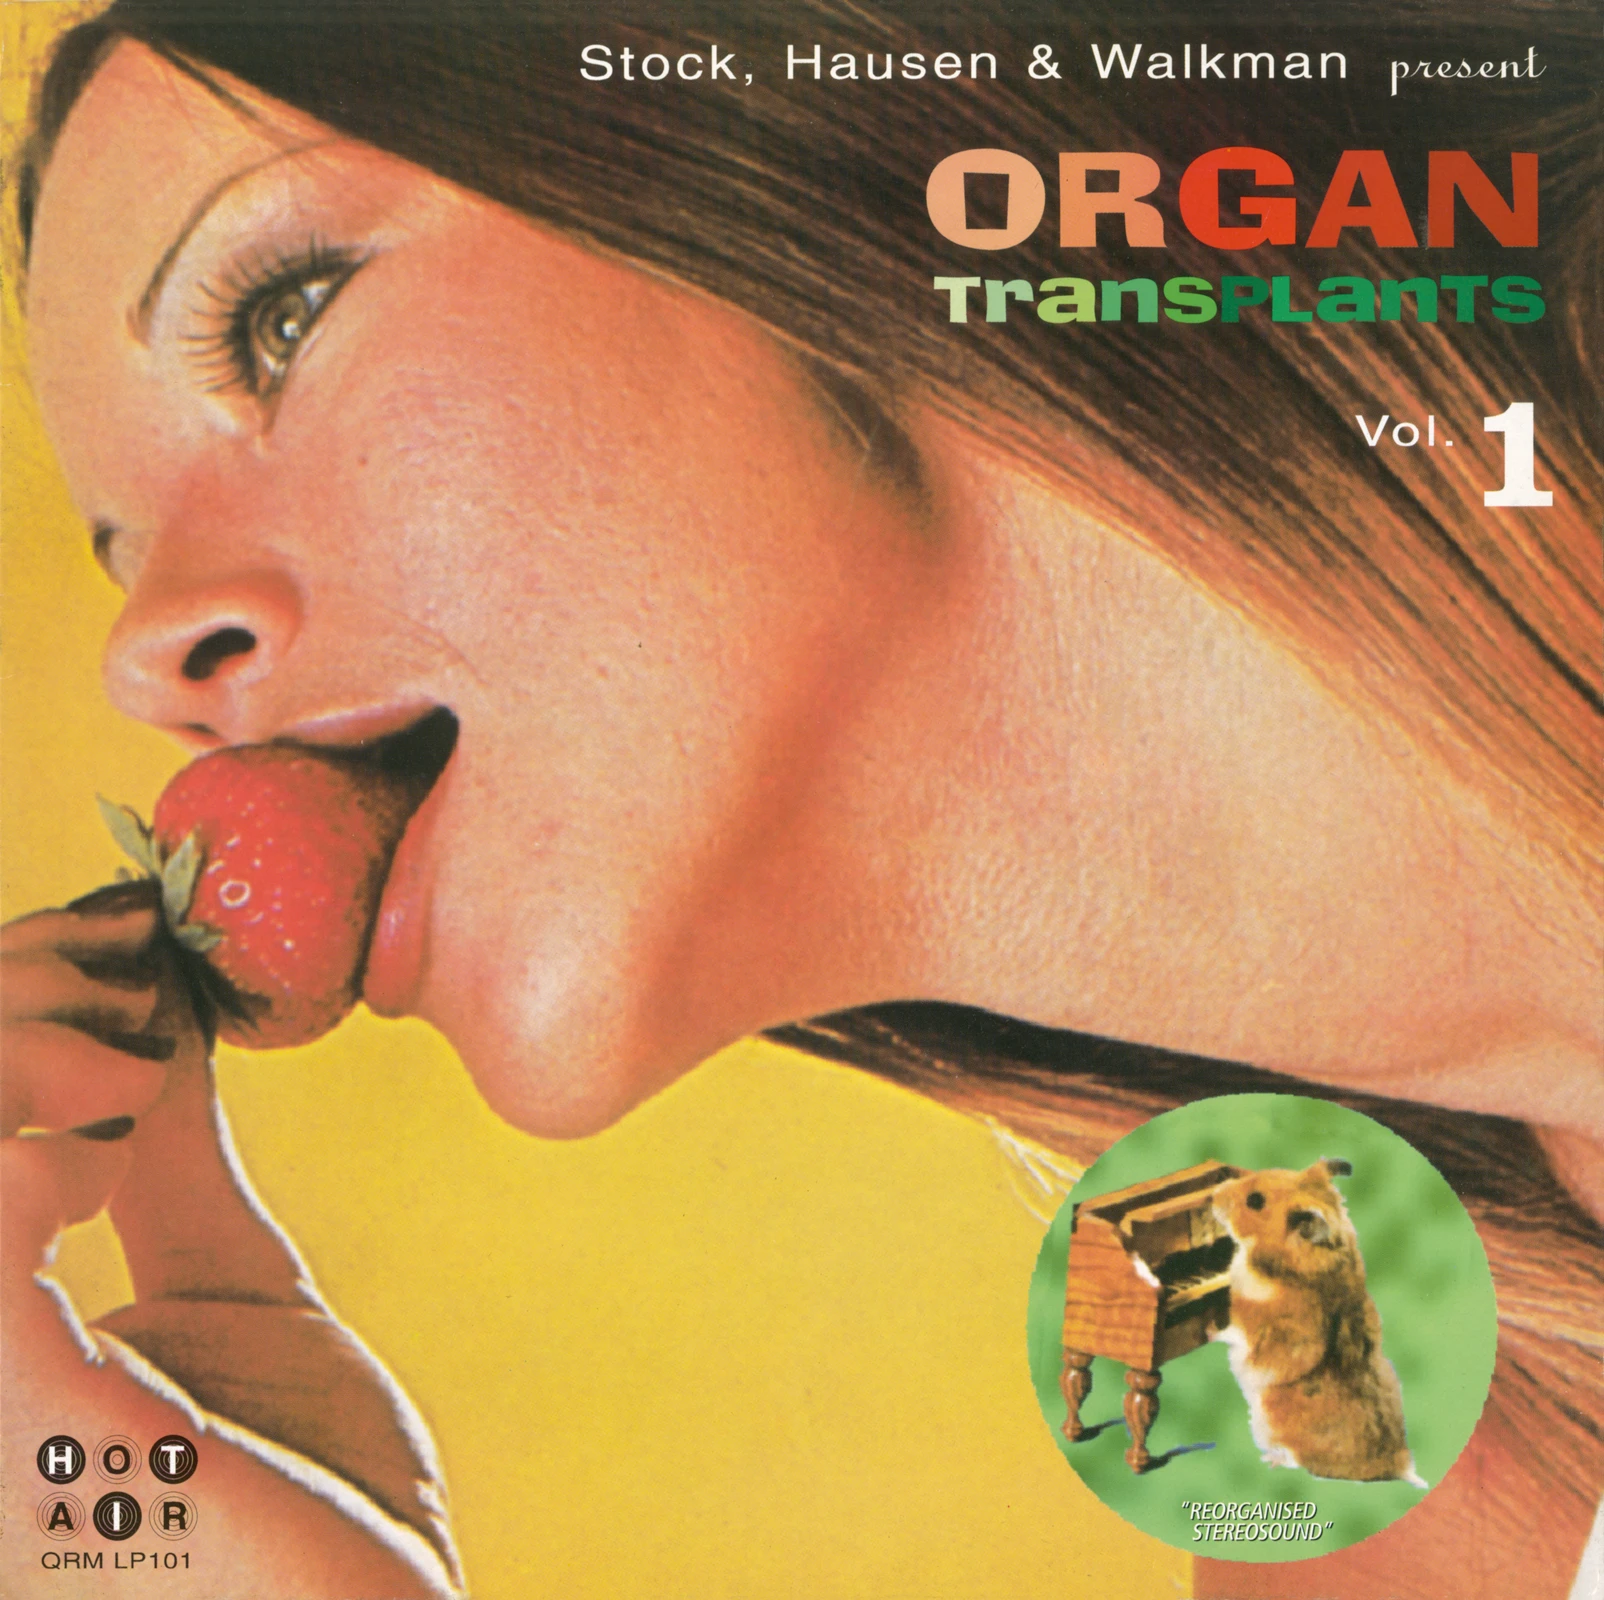 Organ Transplants Vol.1 – Stock, Hausen & Walkman